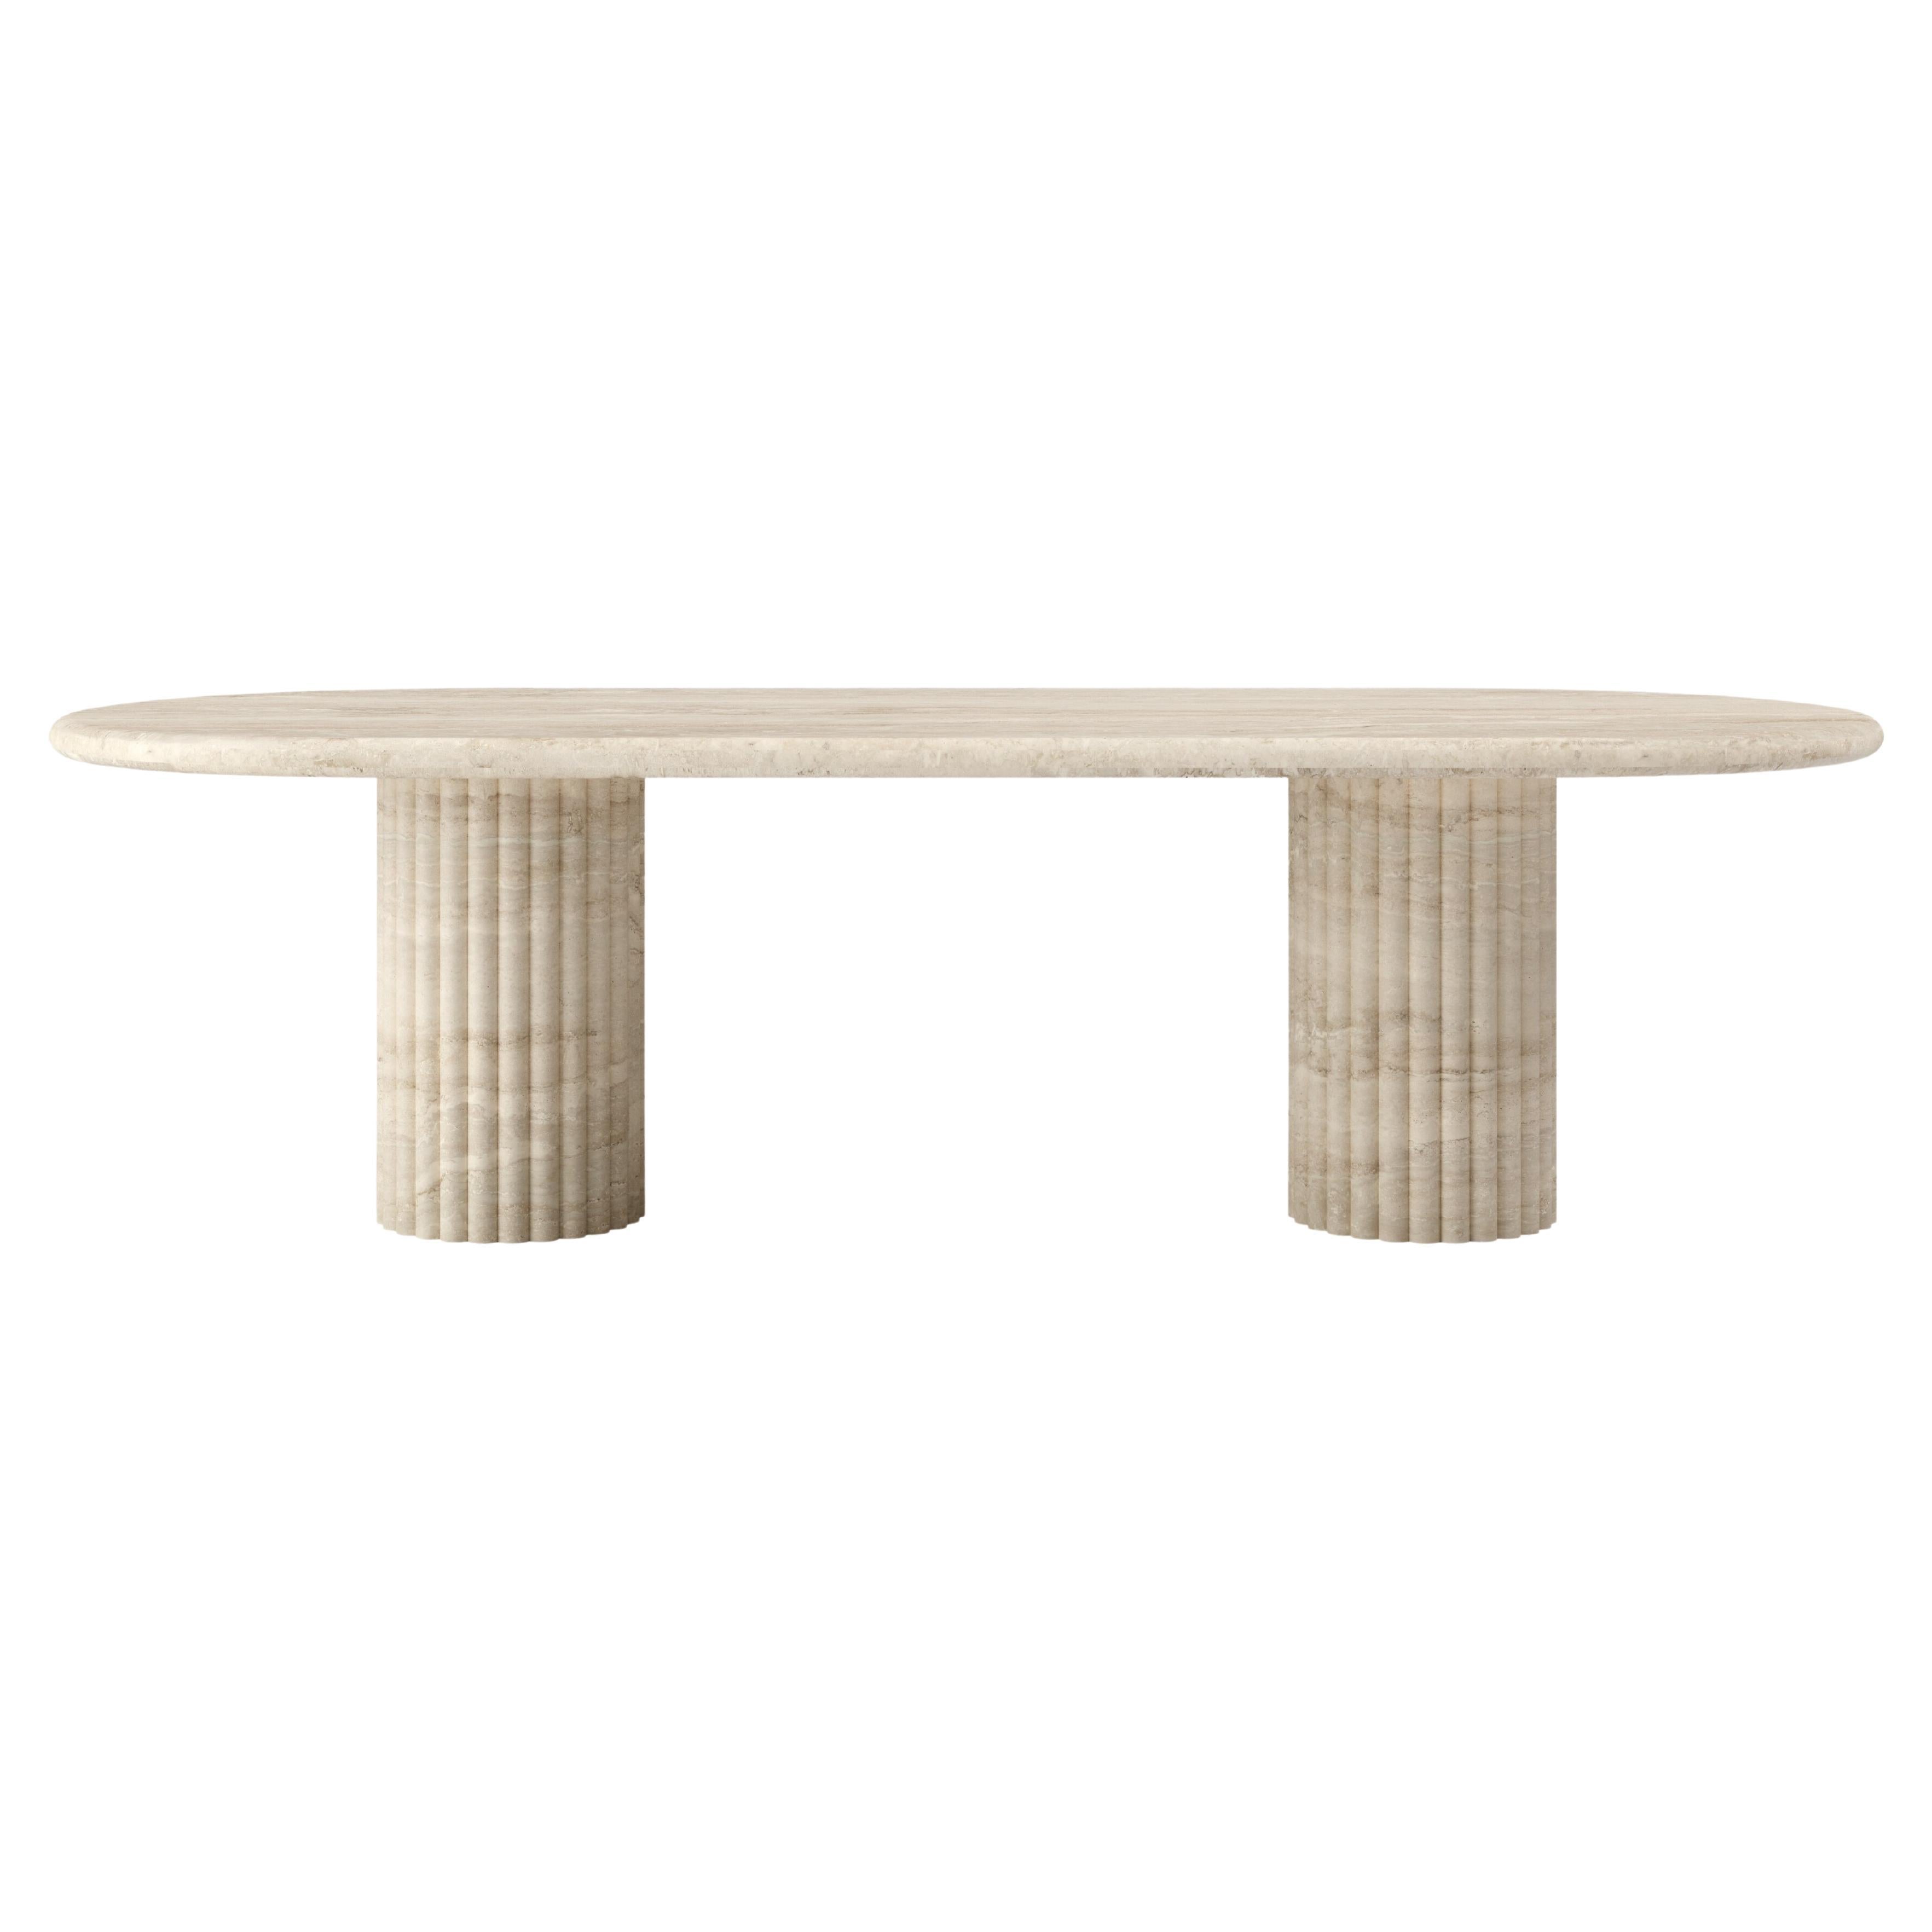 FORM(LA) Fluta Oval Dining Table 84”L x 42”W x 30”H Travertino Navona VC For Sale